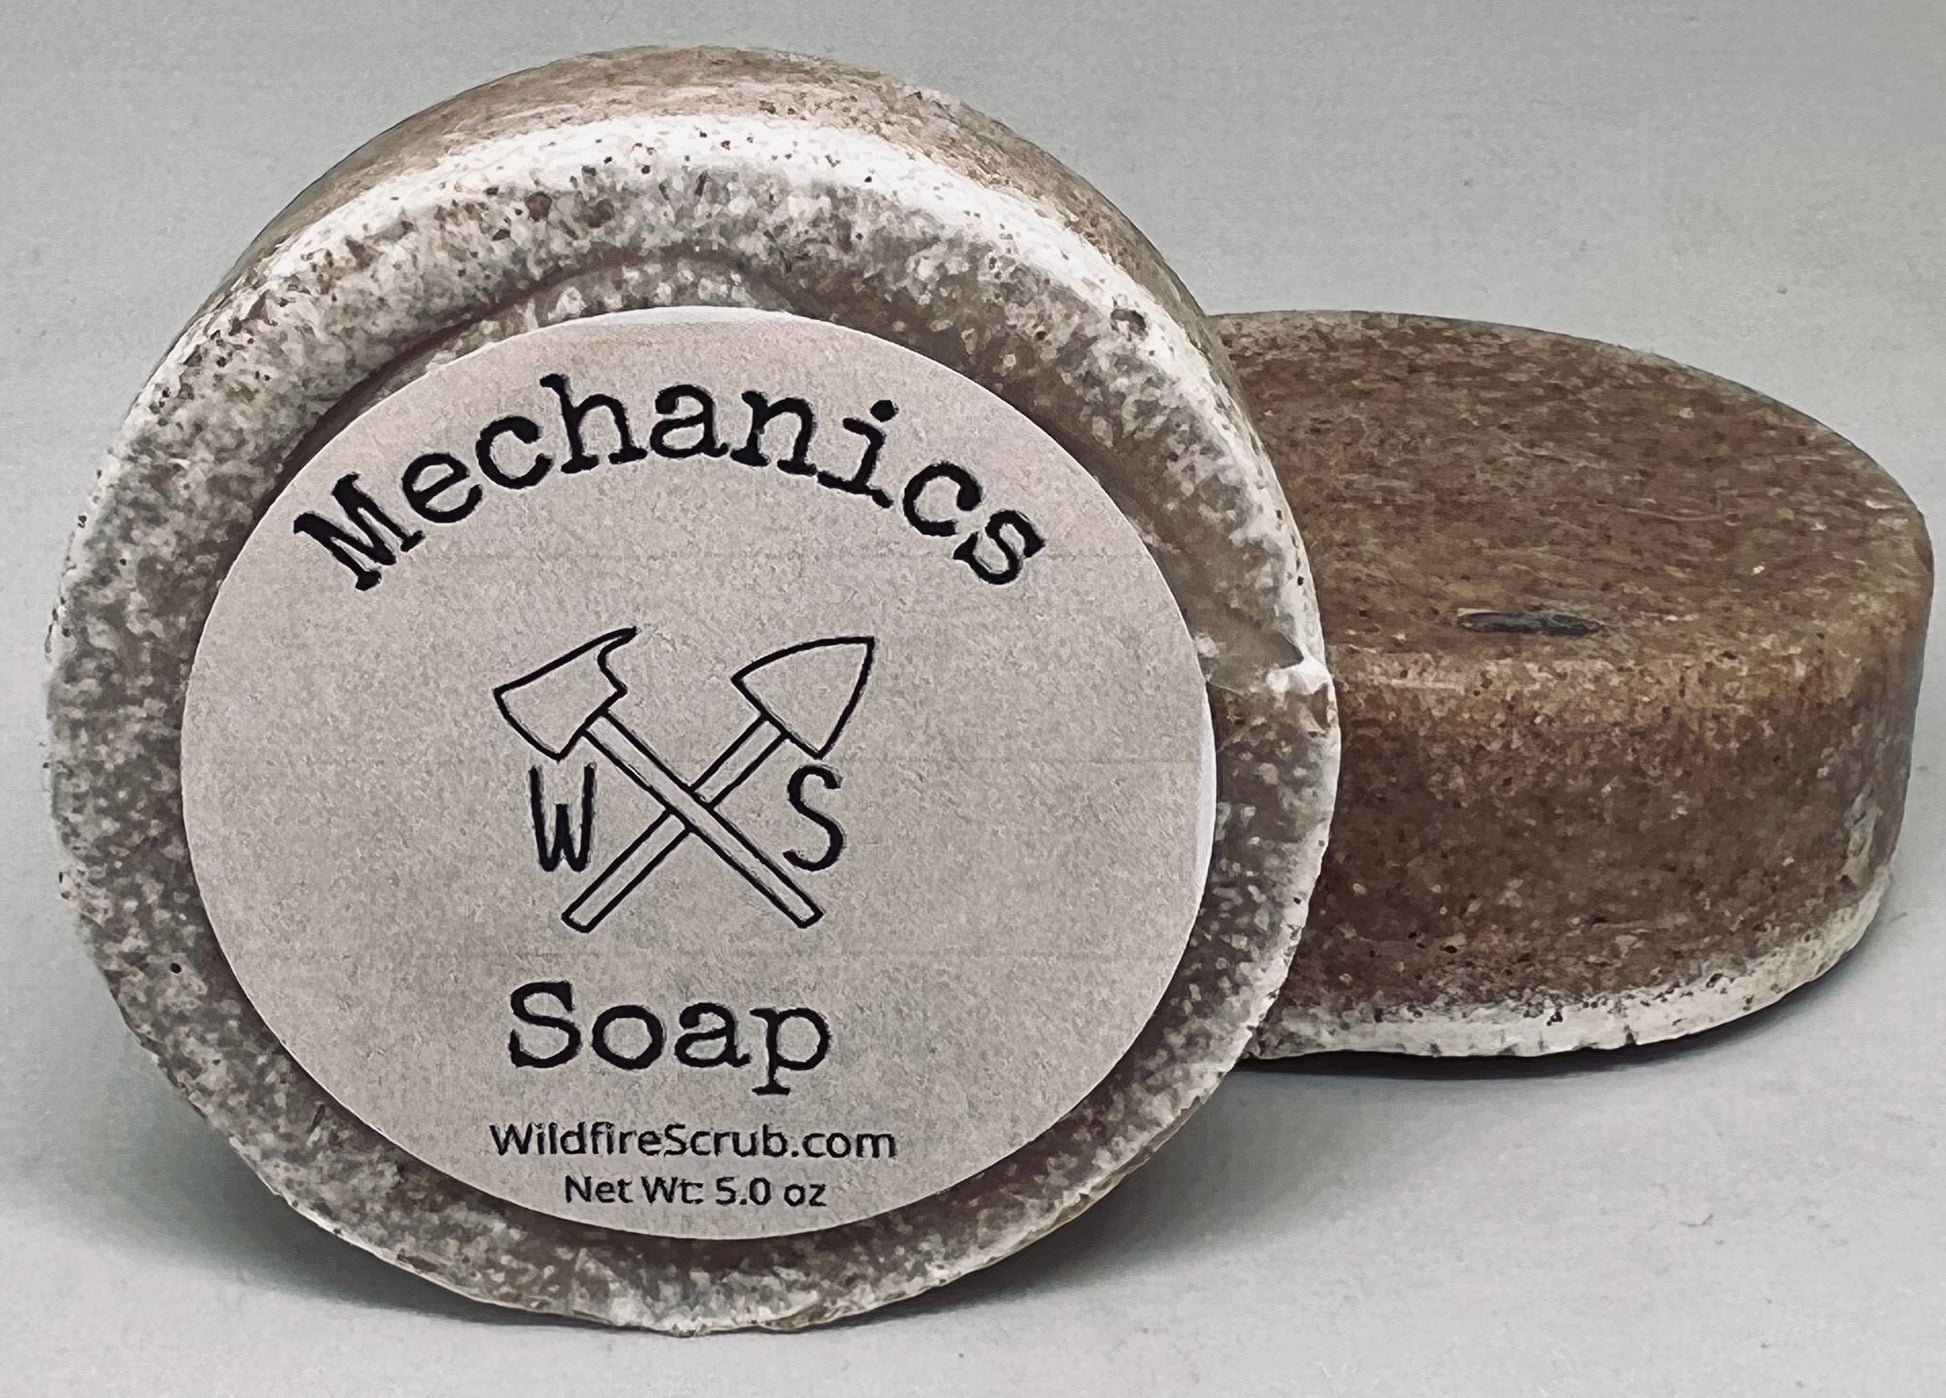 MECHANIC SOAP – Faith & Grace Soap Company